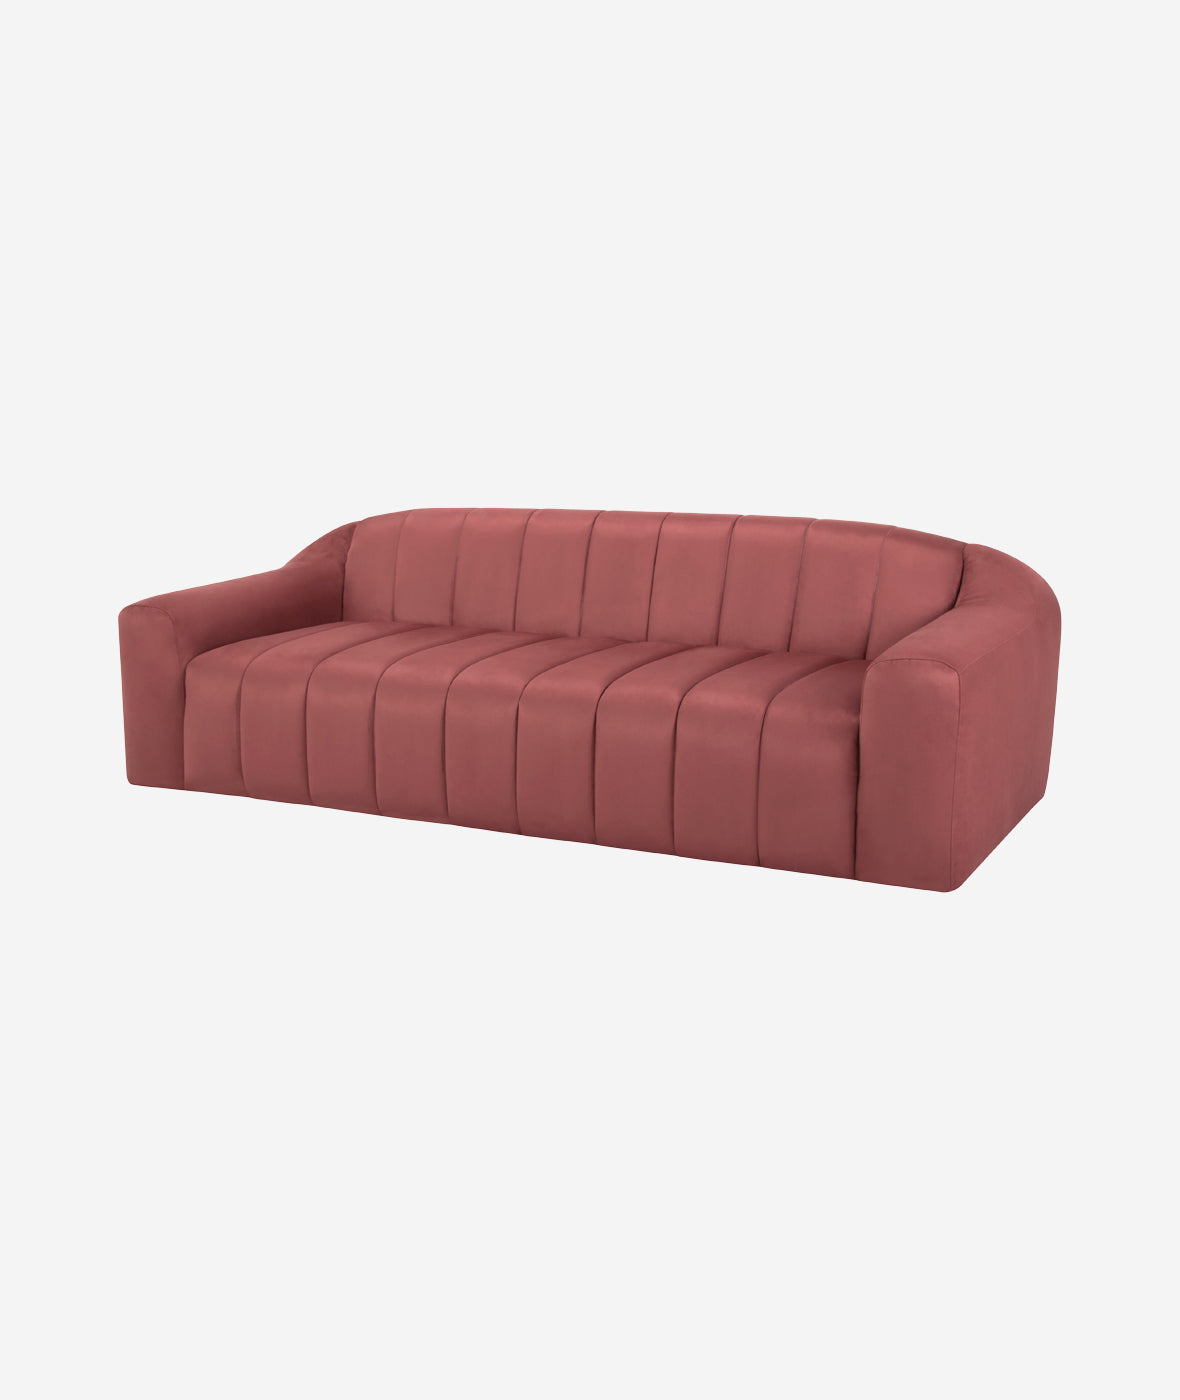 Coraline Sofa - More Options